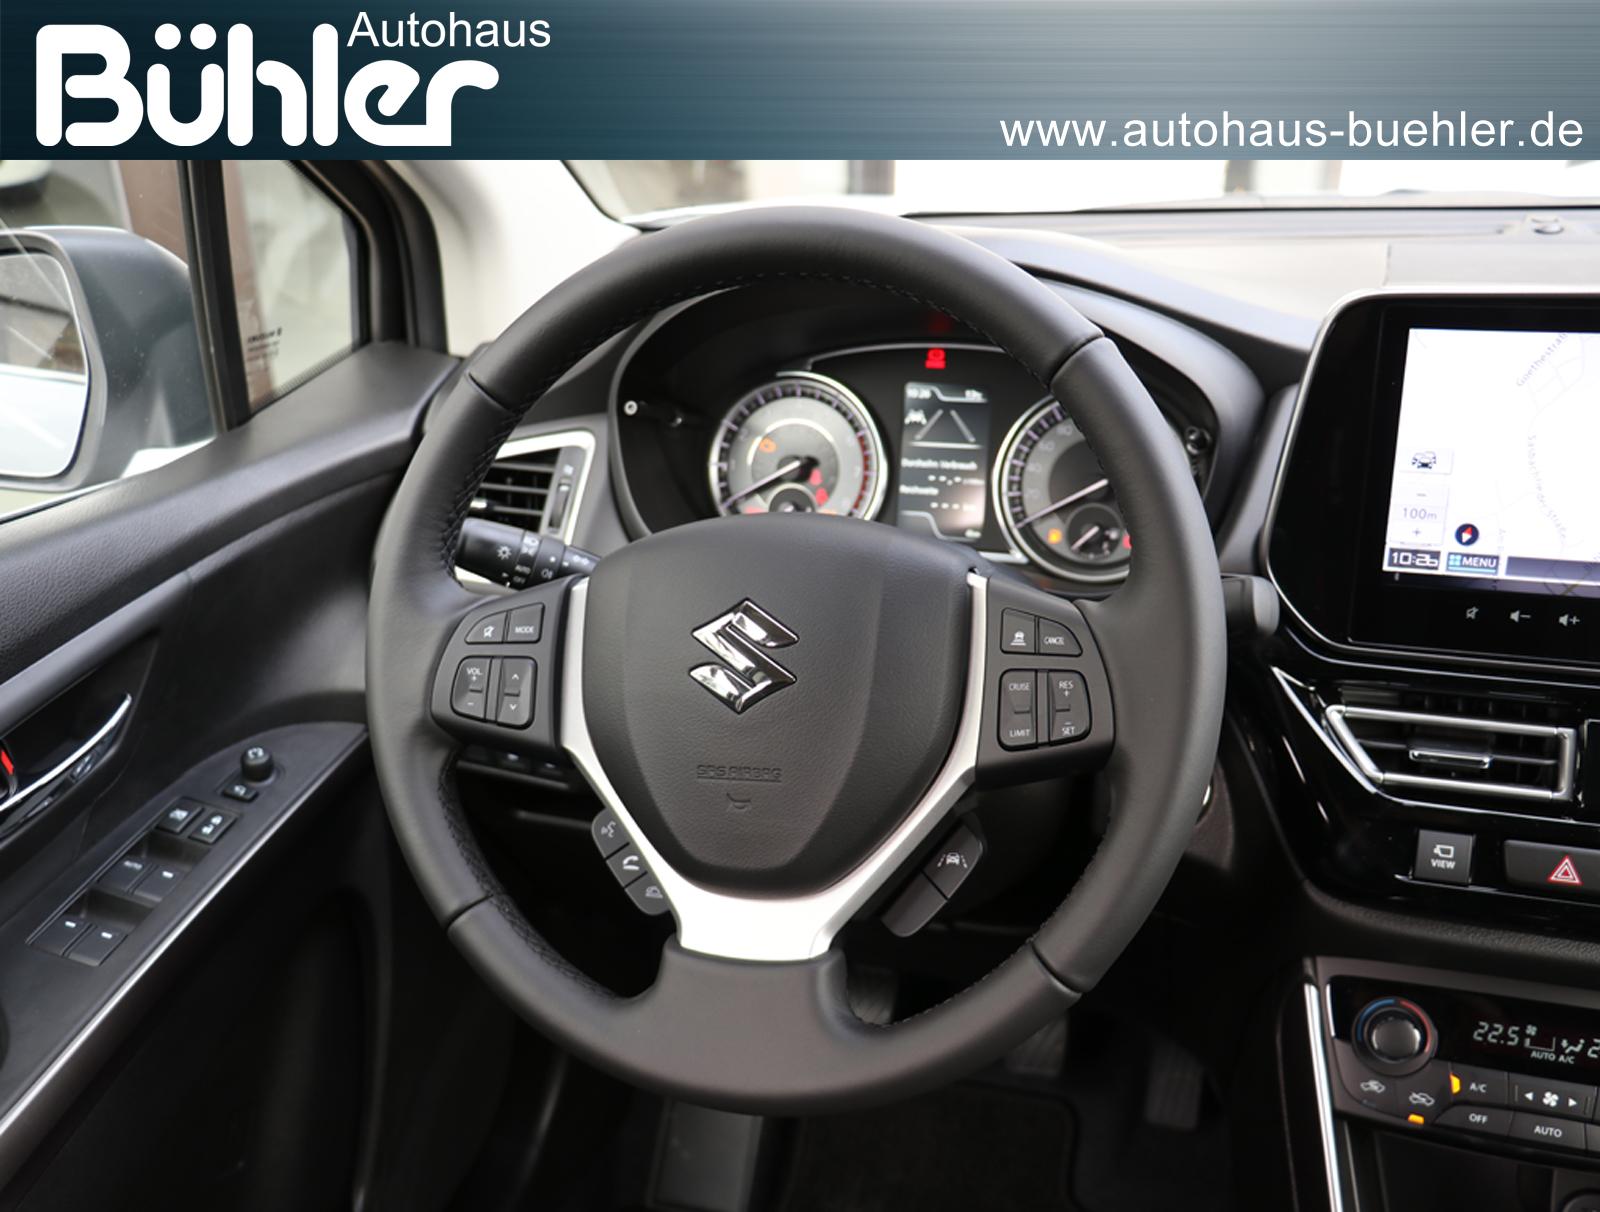 Suzuki SX4 S-Cross Comfort + 1.4 Hybrid - Cool White Pearl Metallic